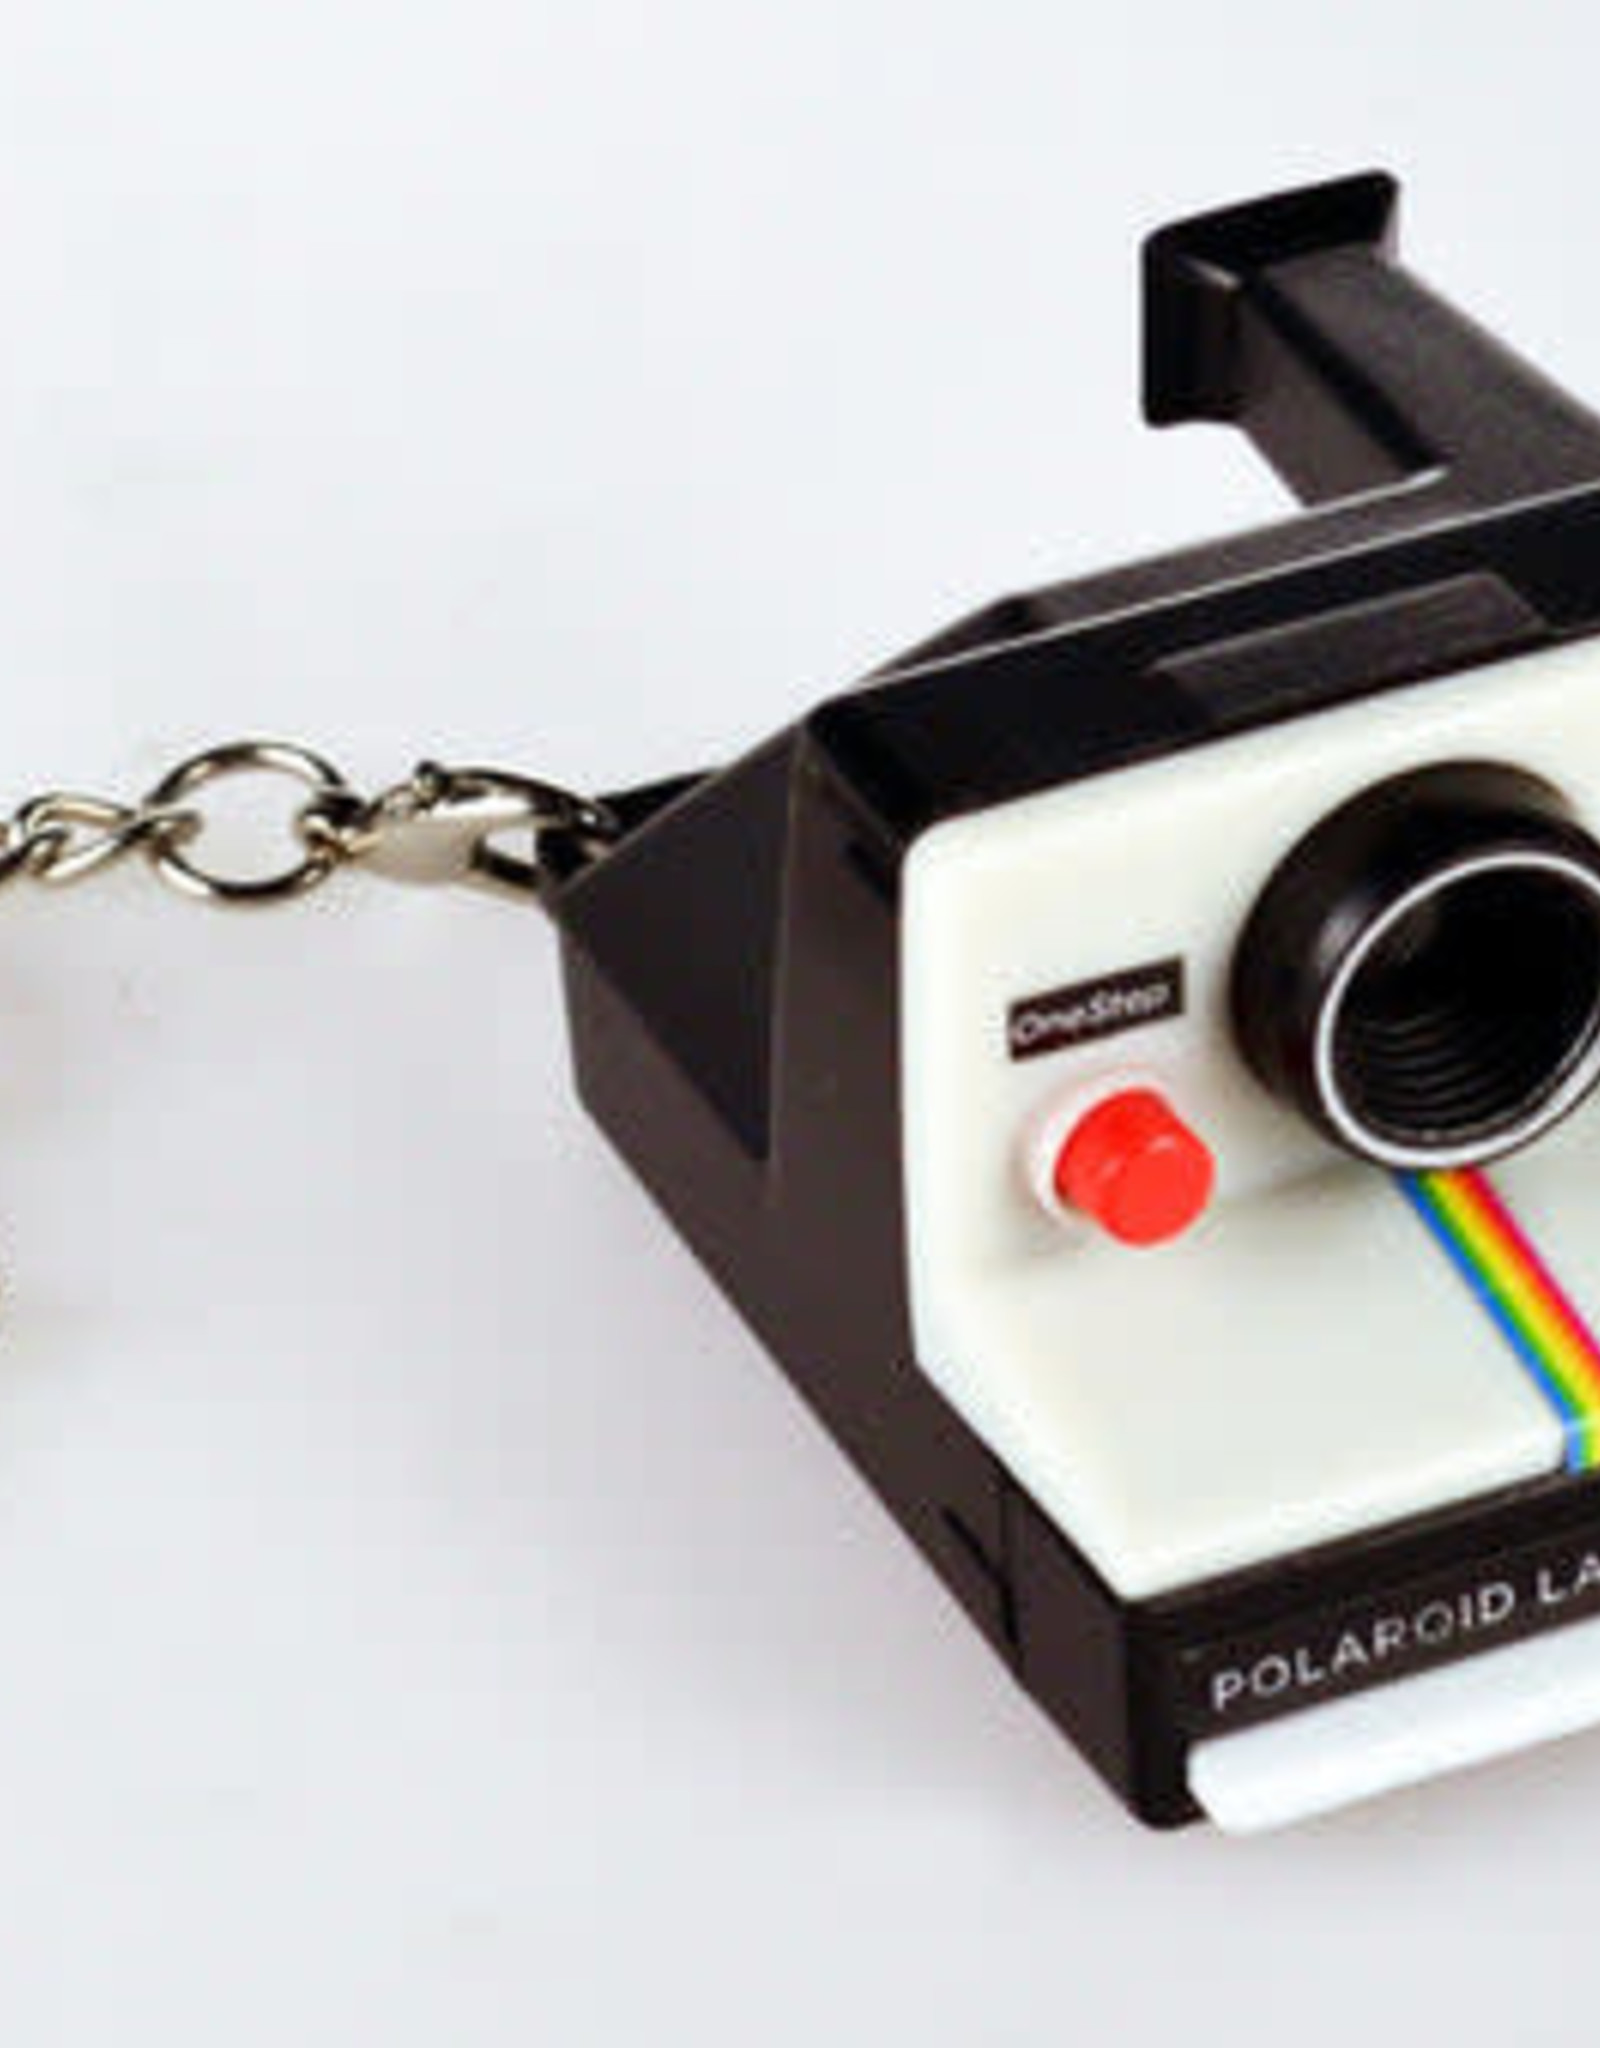 Super Impulse Super Impulse Polaroid Camera Keychain